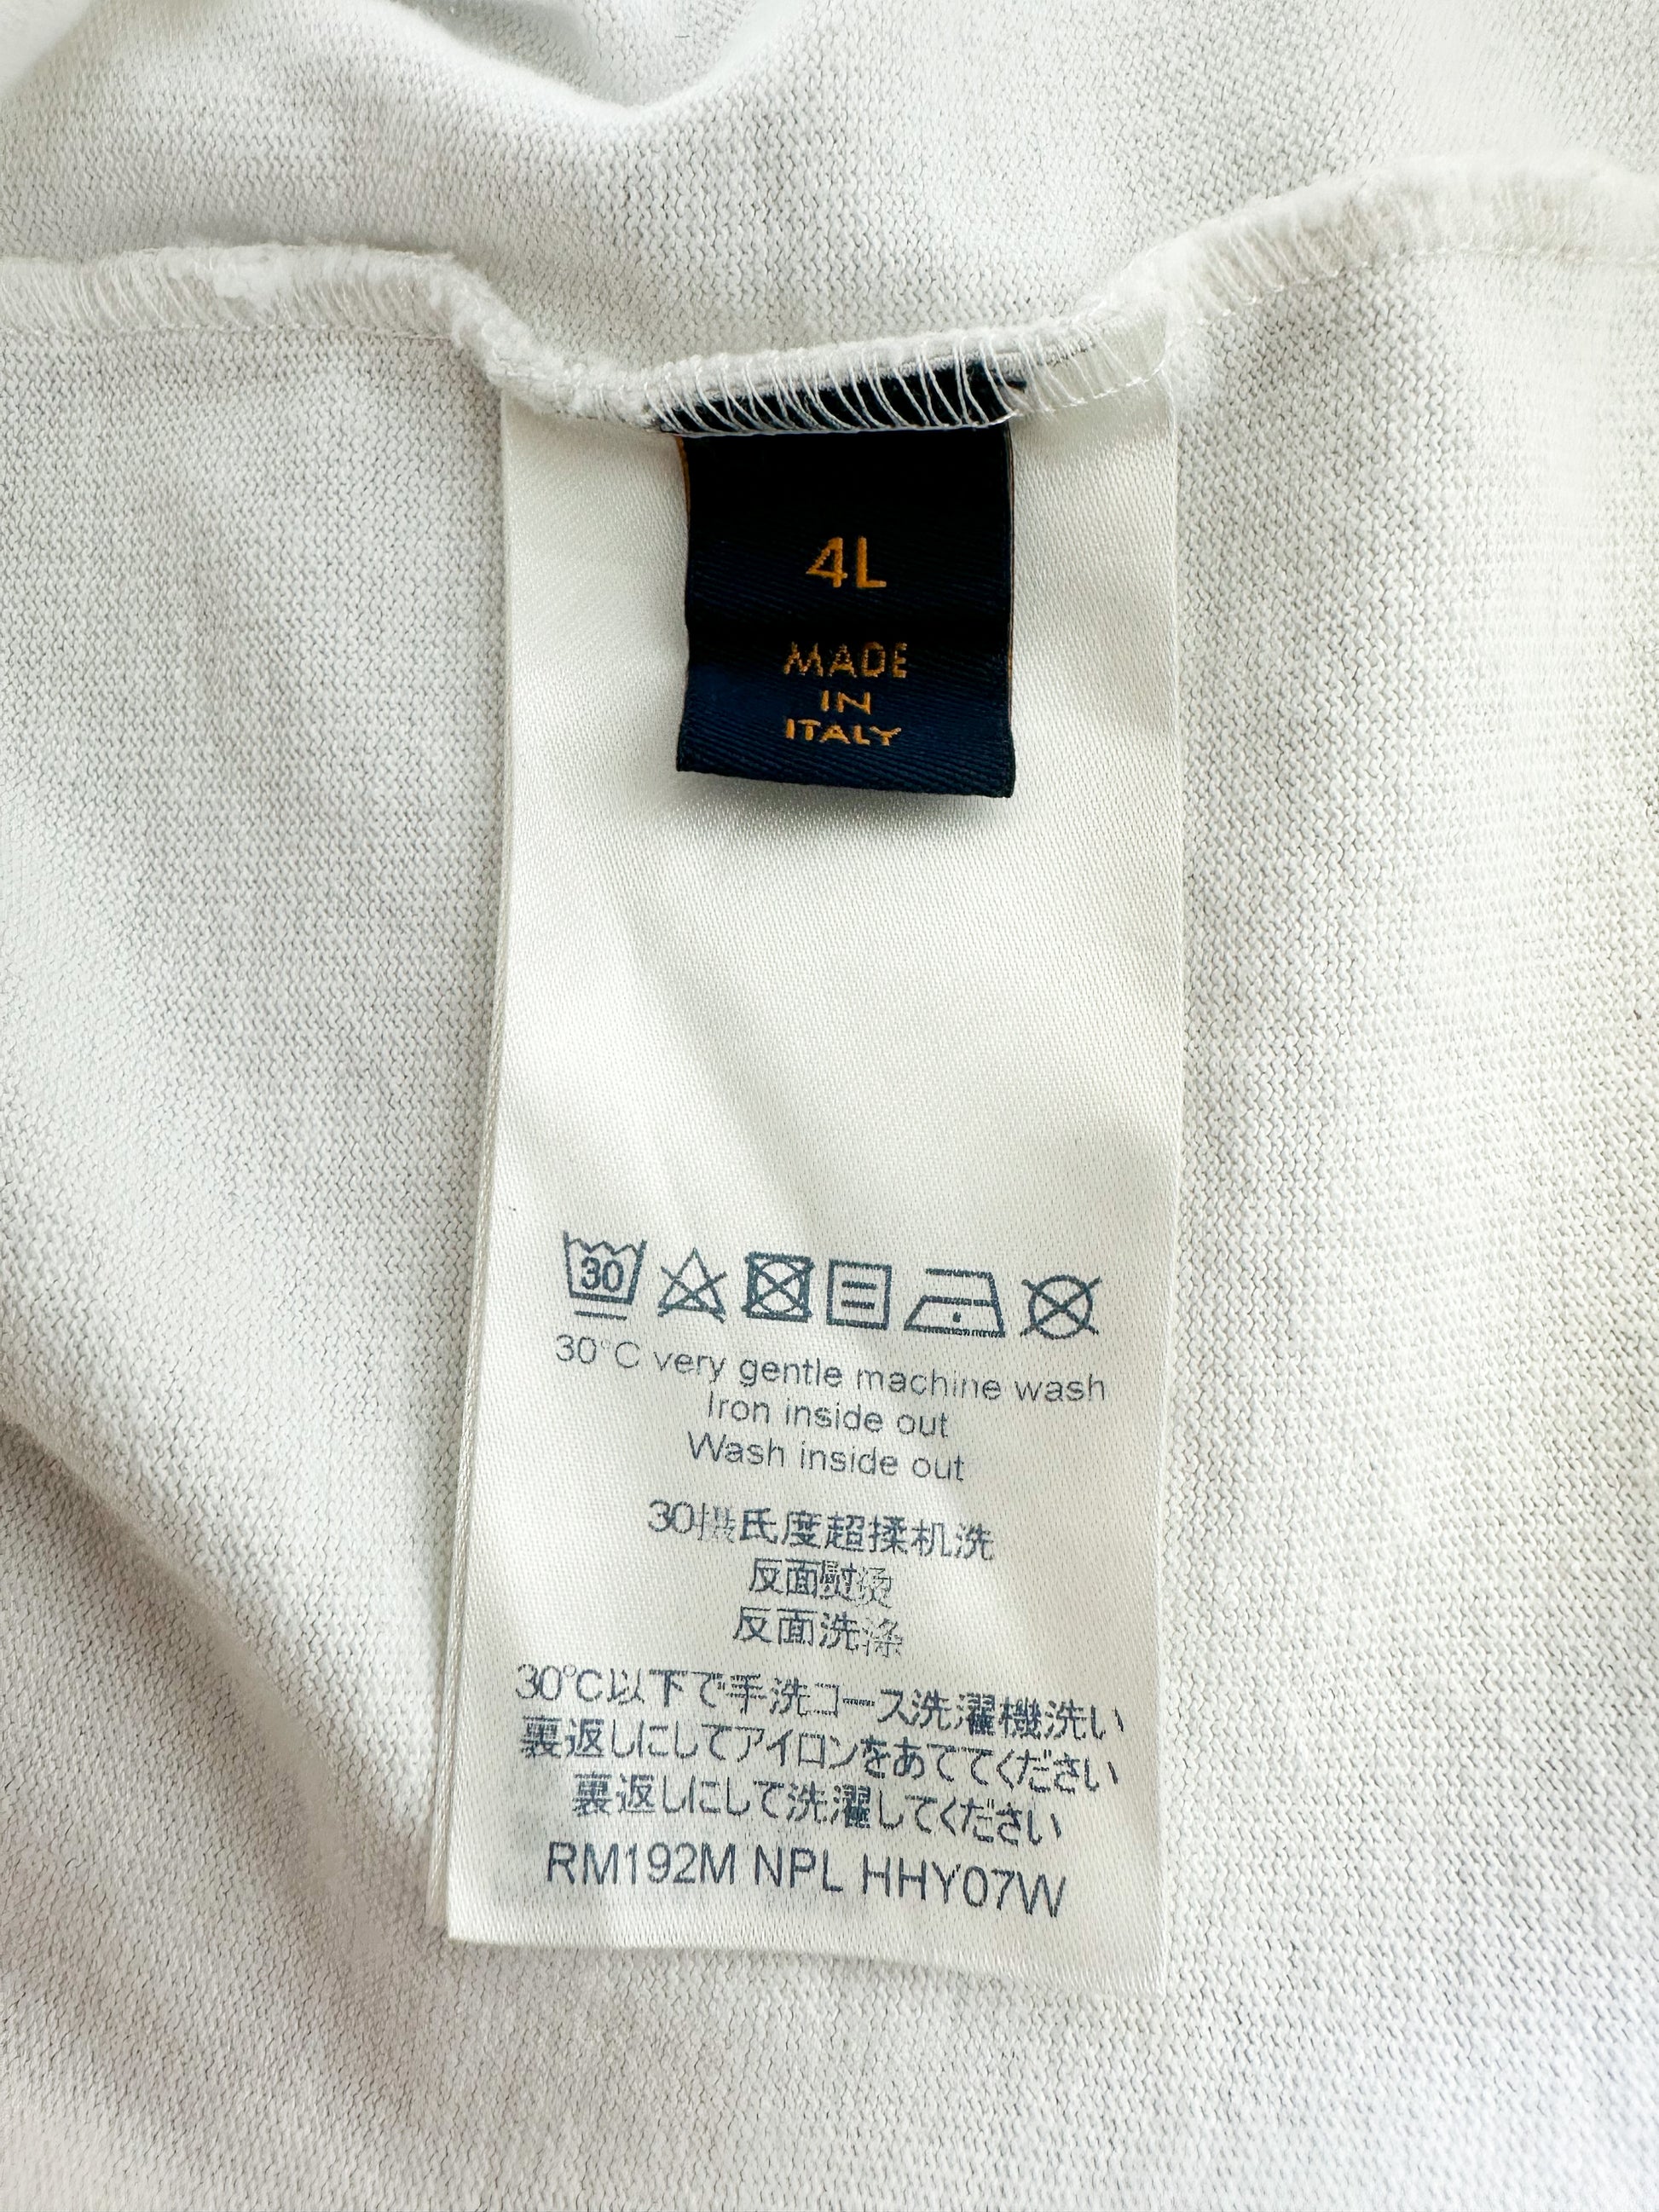 Louis Vuitton White T Shirt Réf. 1854 Blue Red Barcode Logo Brand